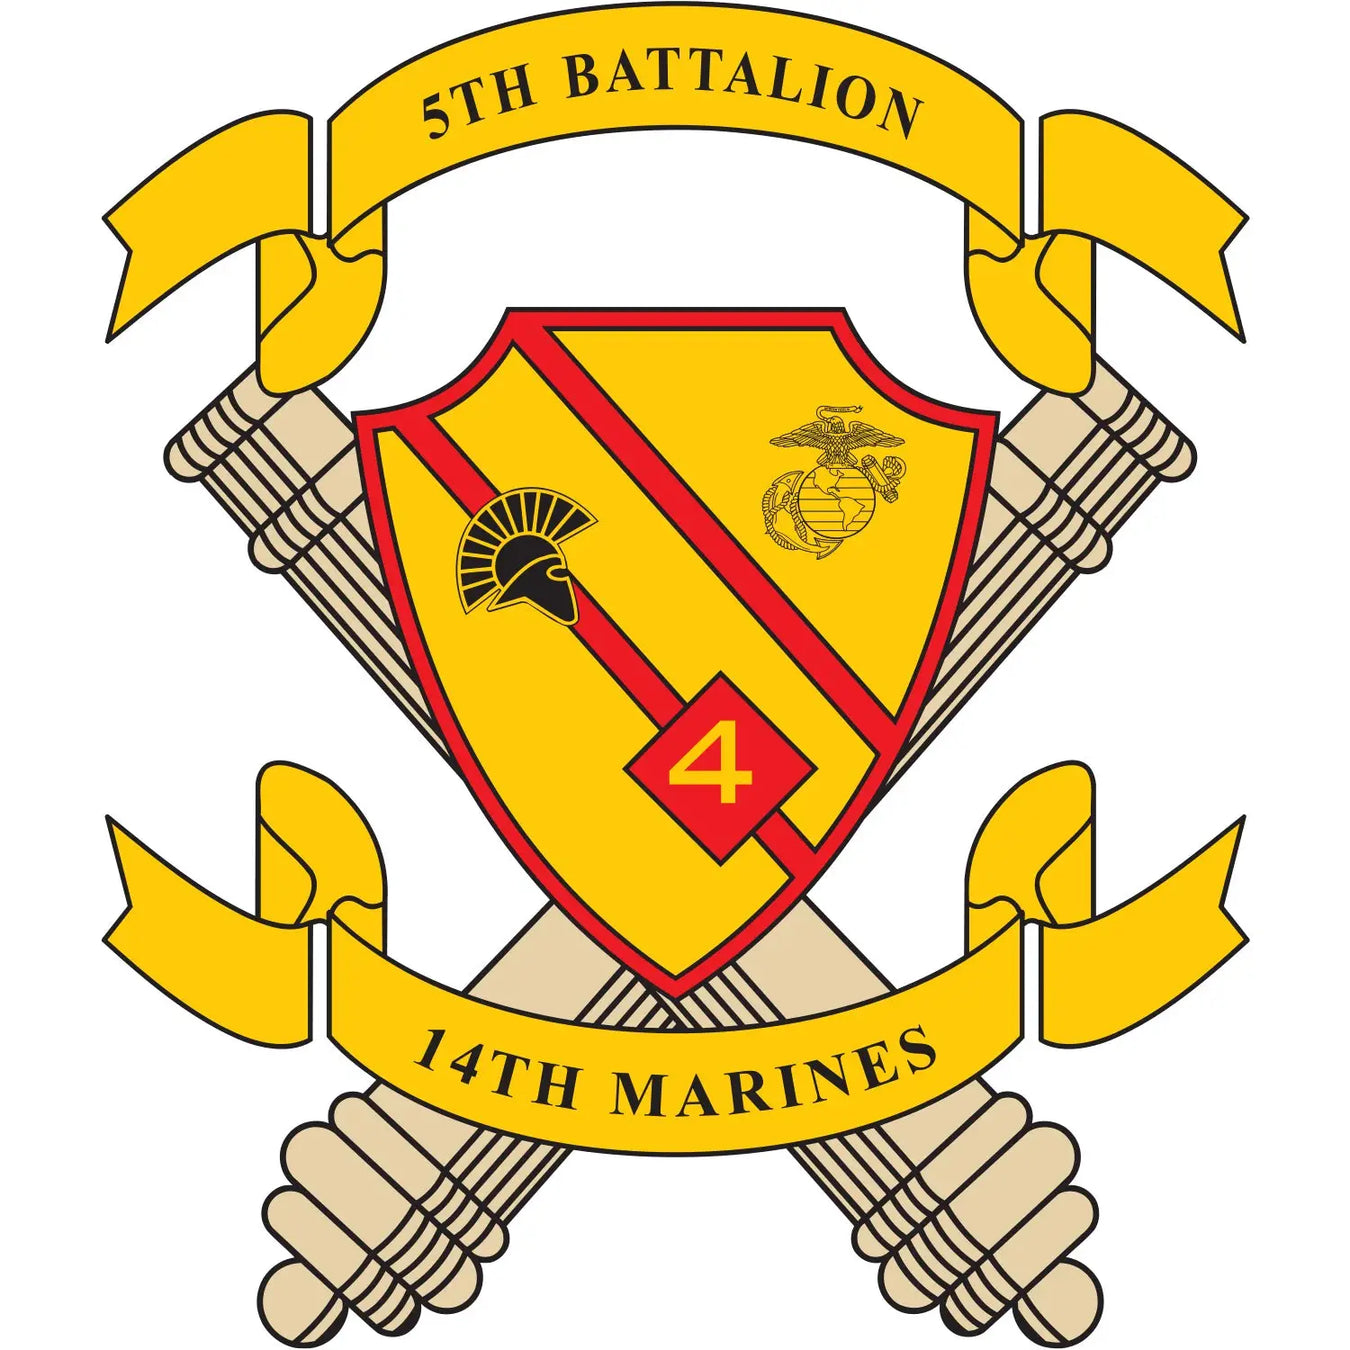 5th Battalion, 14th Marines